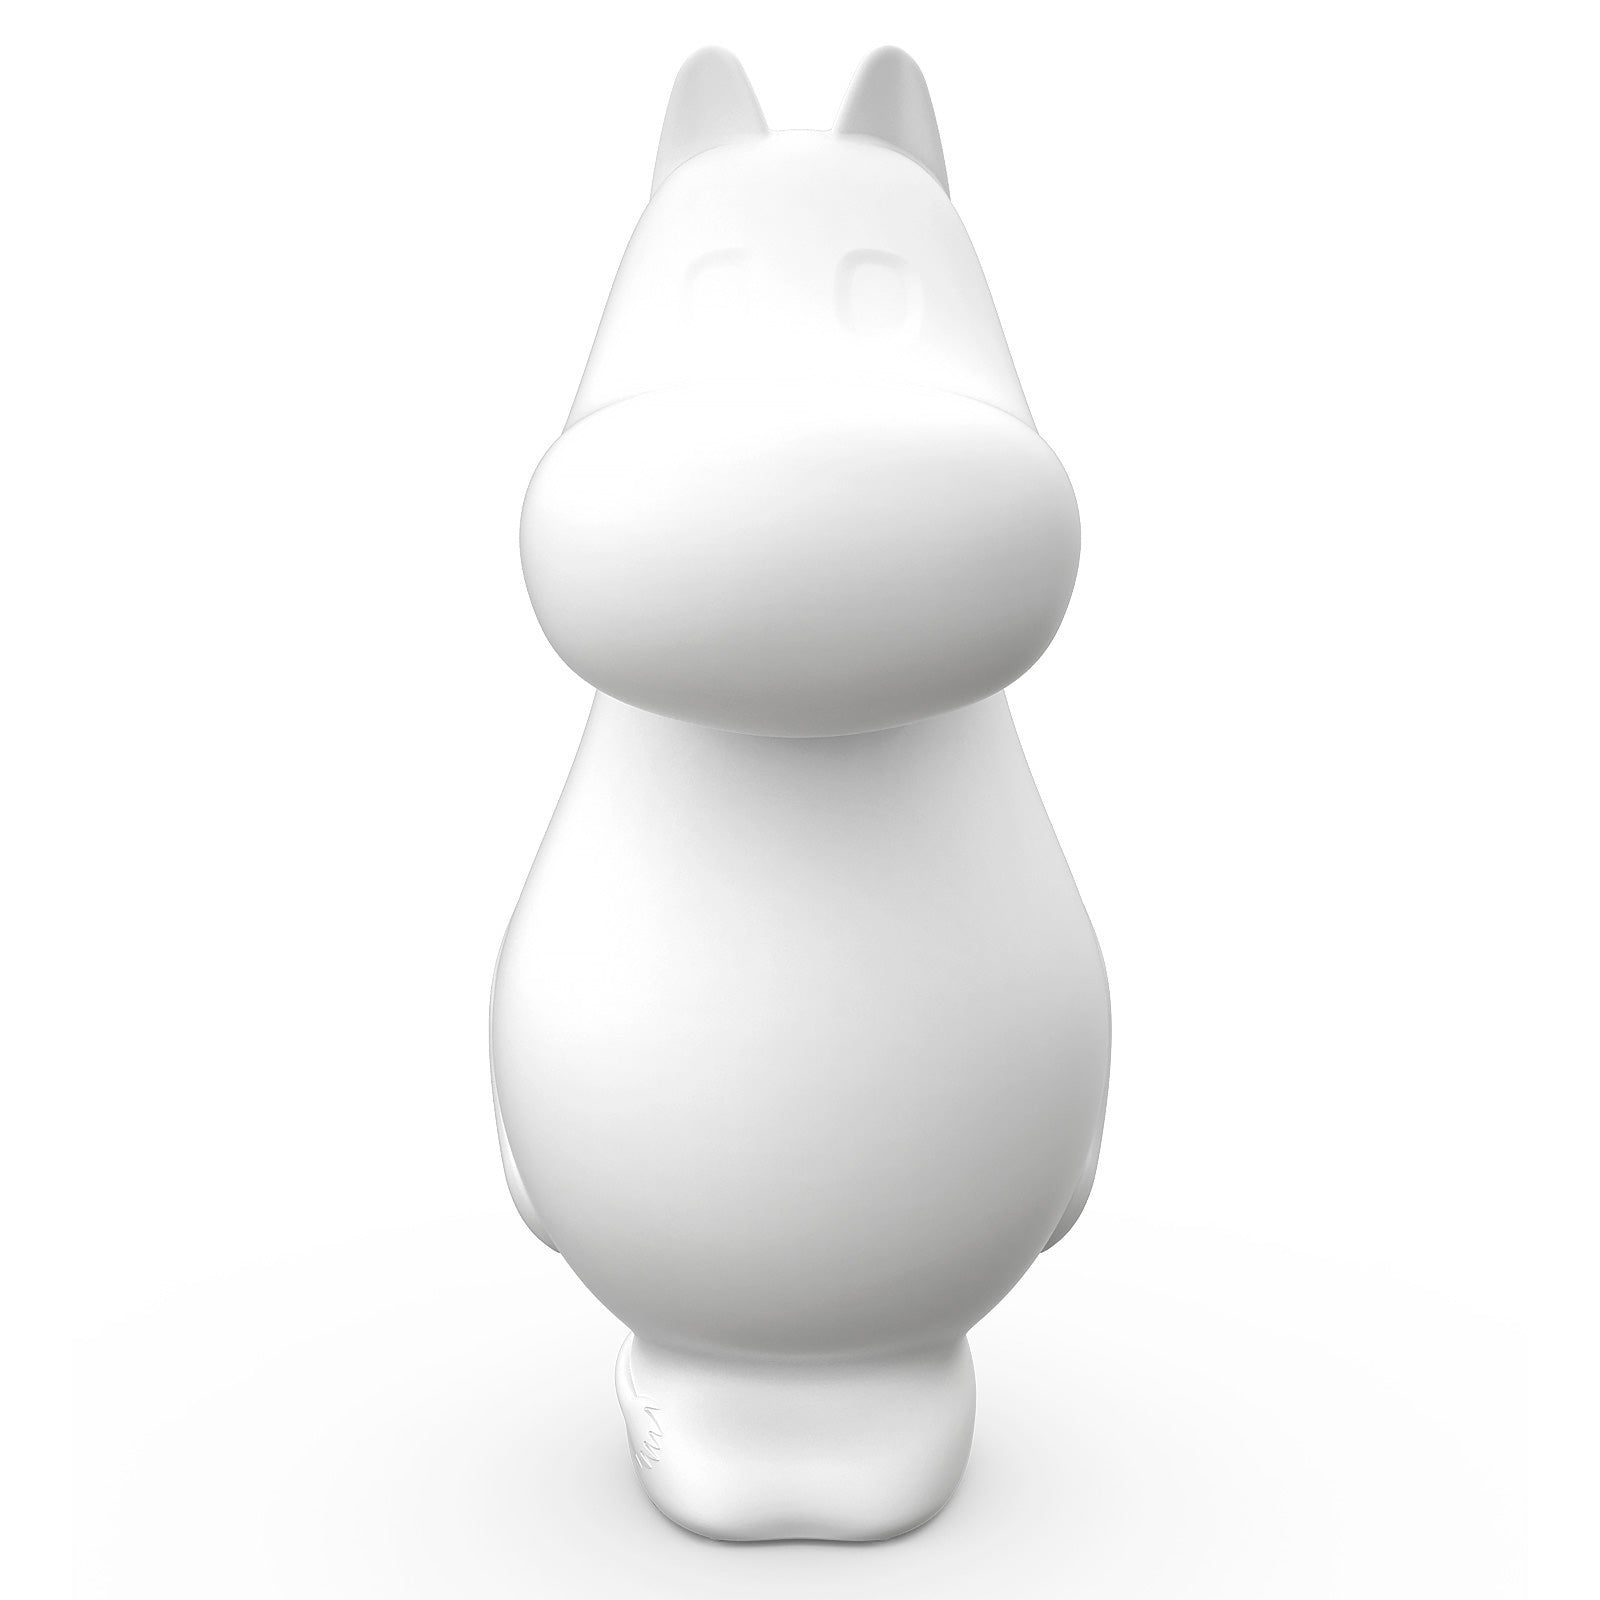 Moomin Light - Muumipeikko L - Moomintroll floor lamp